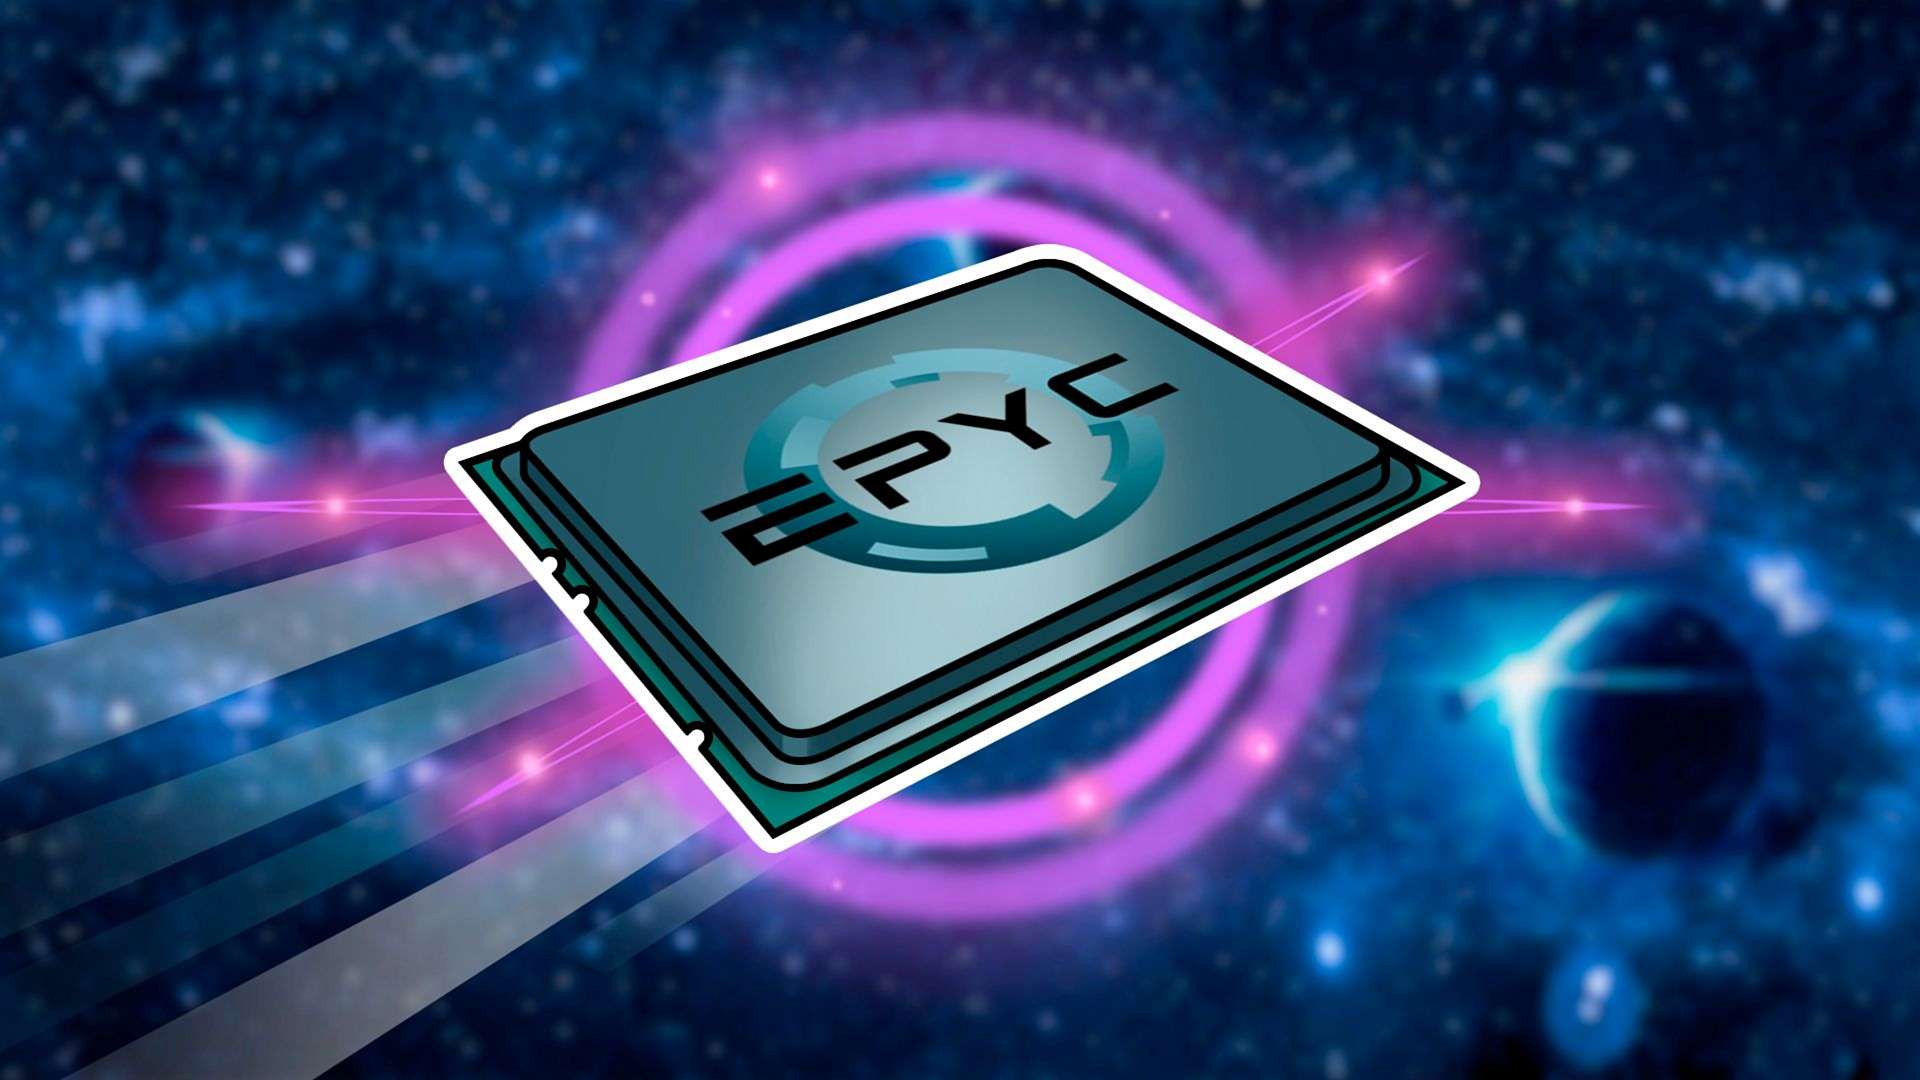 Hivelocity presents instantly deployable dedicated servers based on AMD EPYC